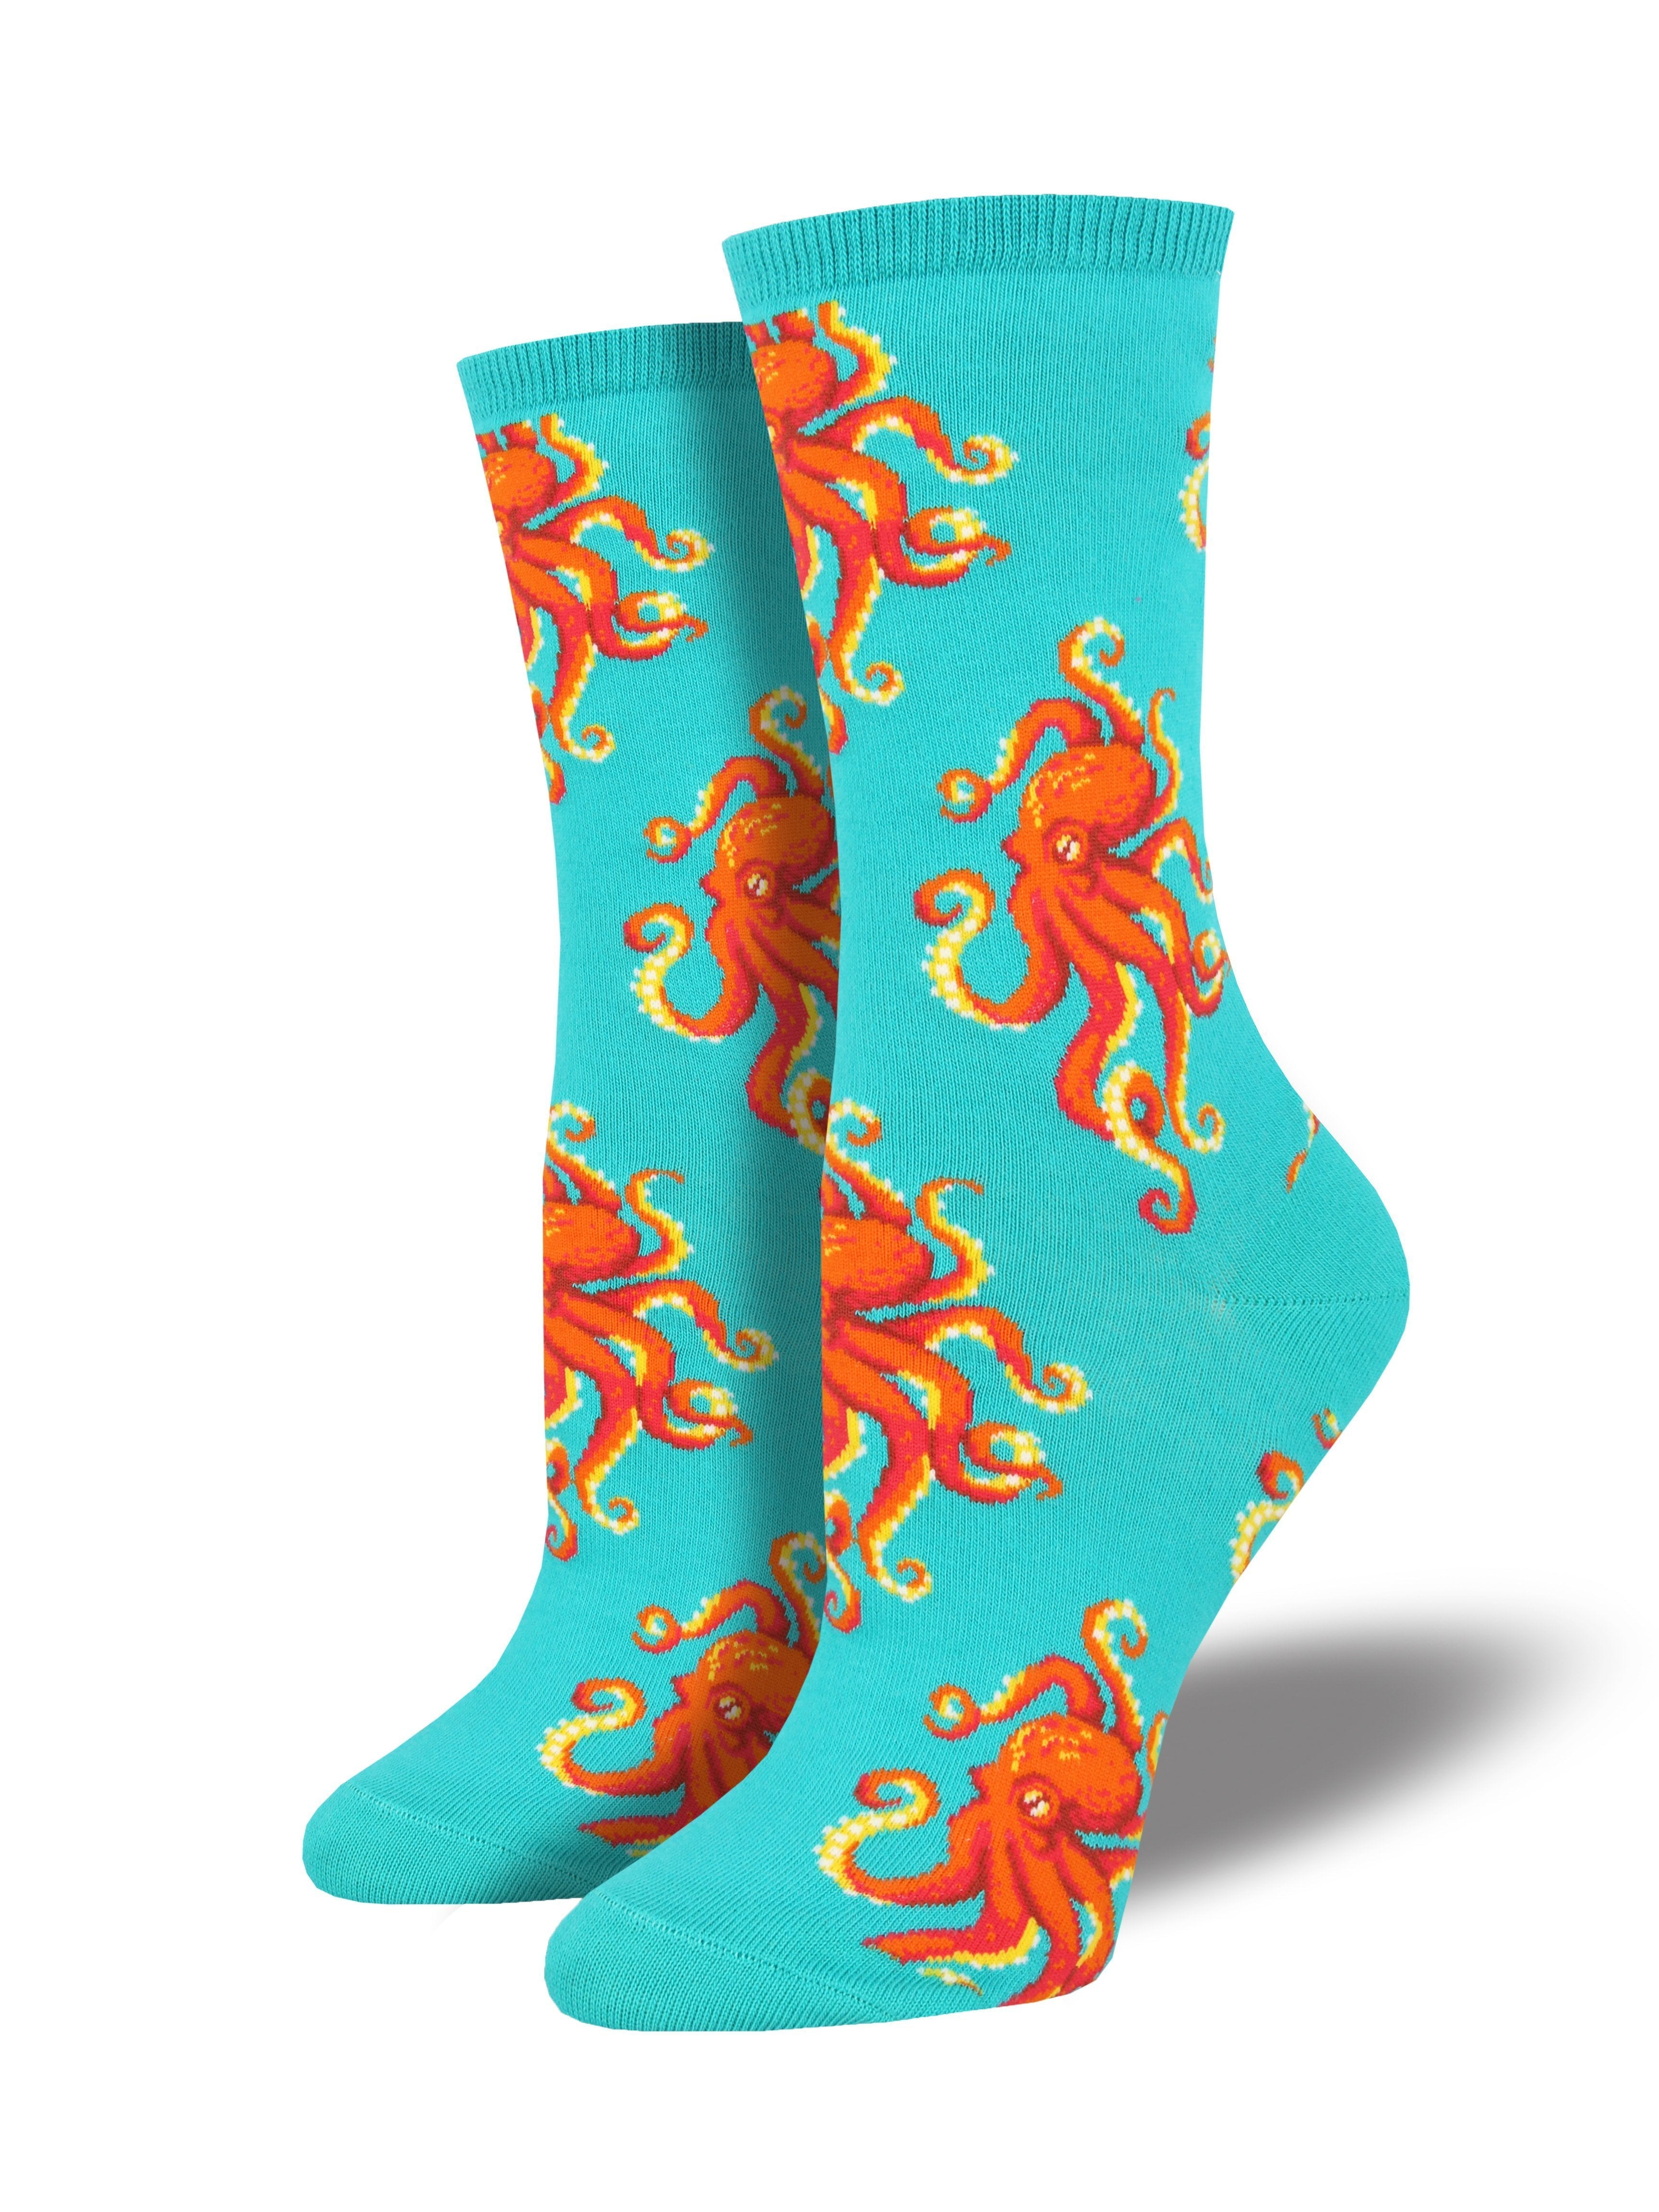 Women's "Socktopus" Socks